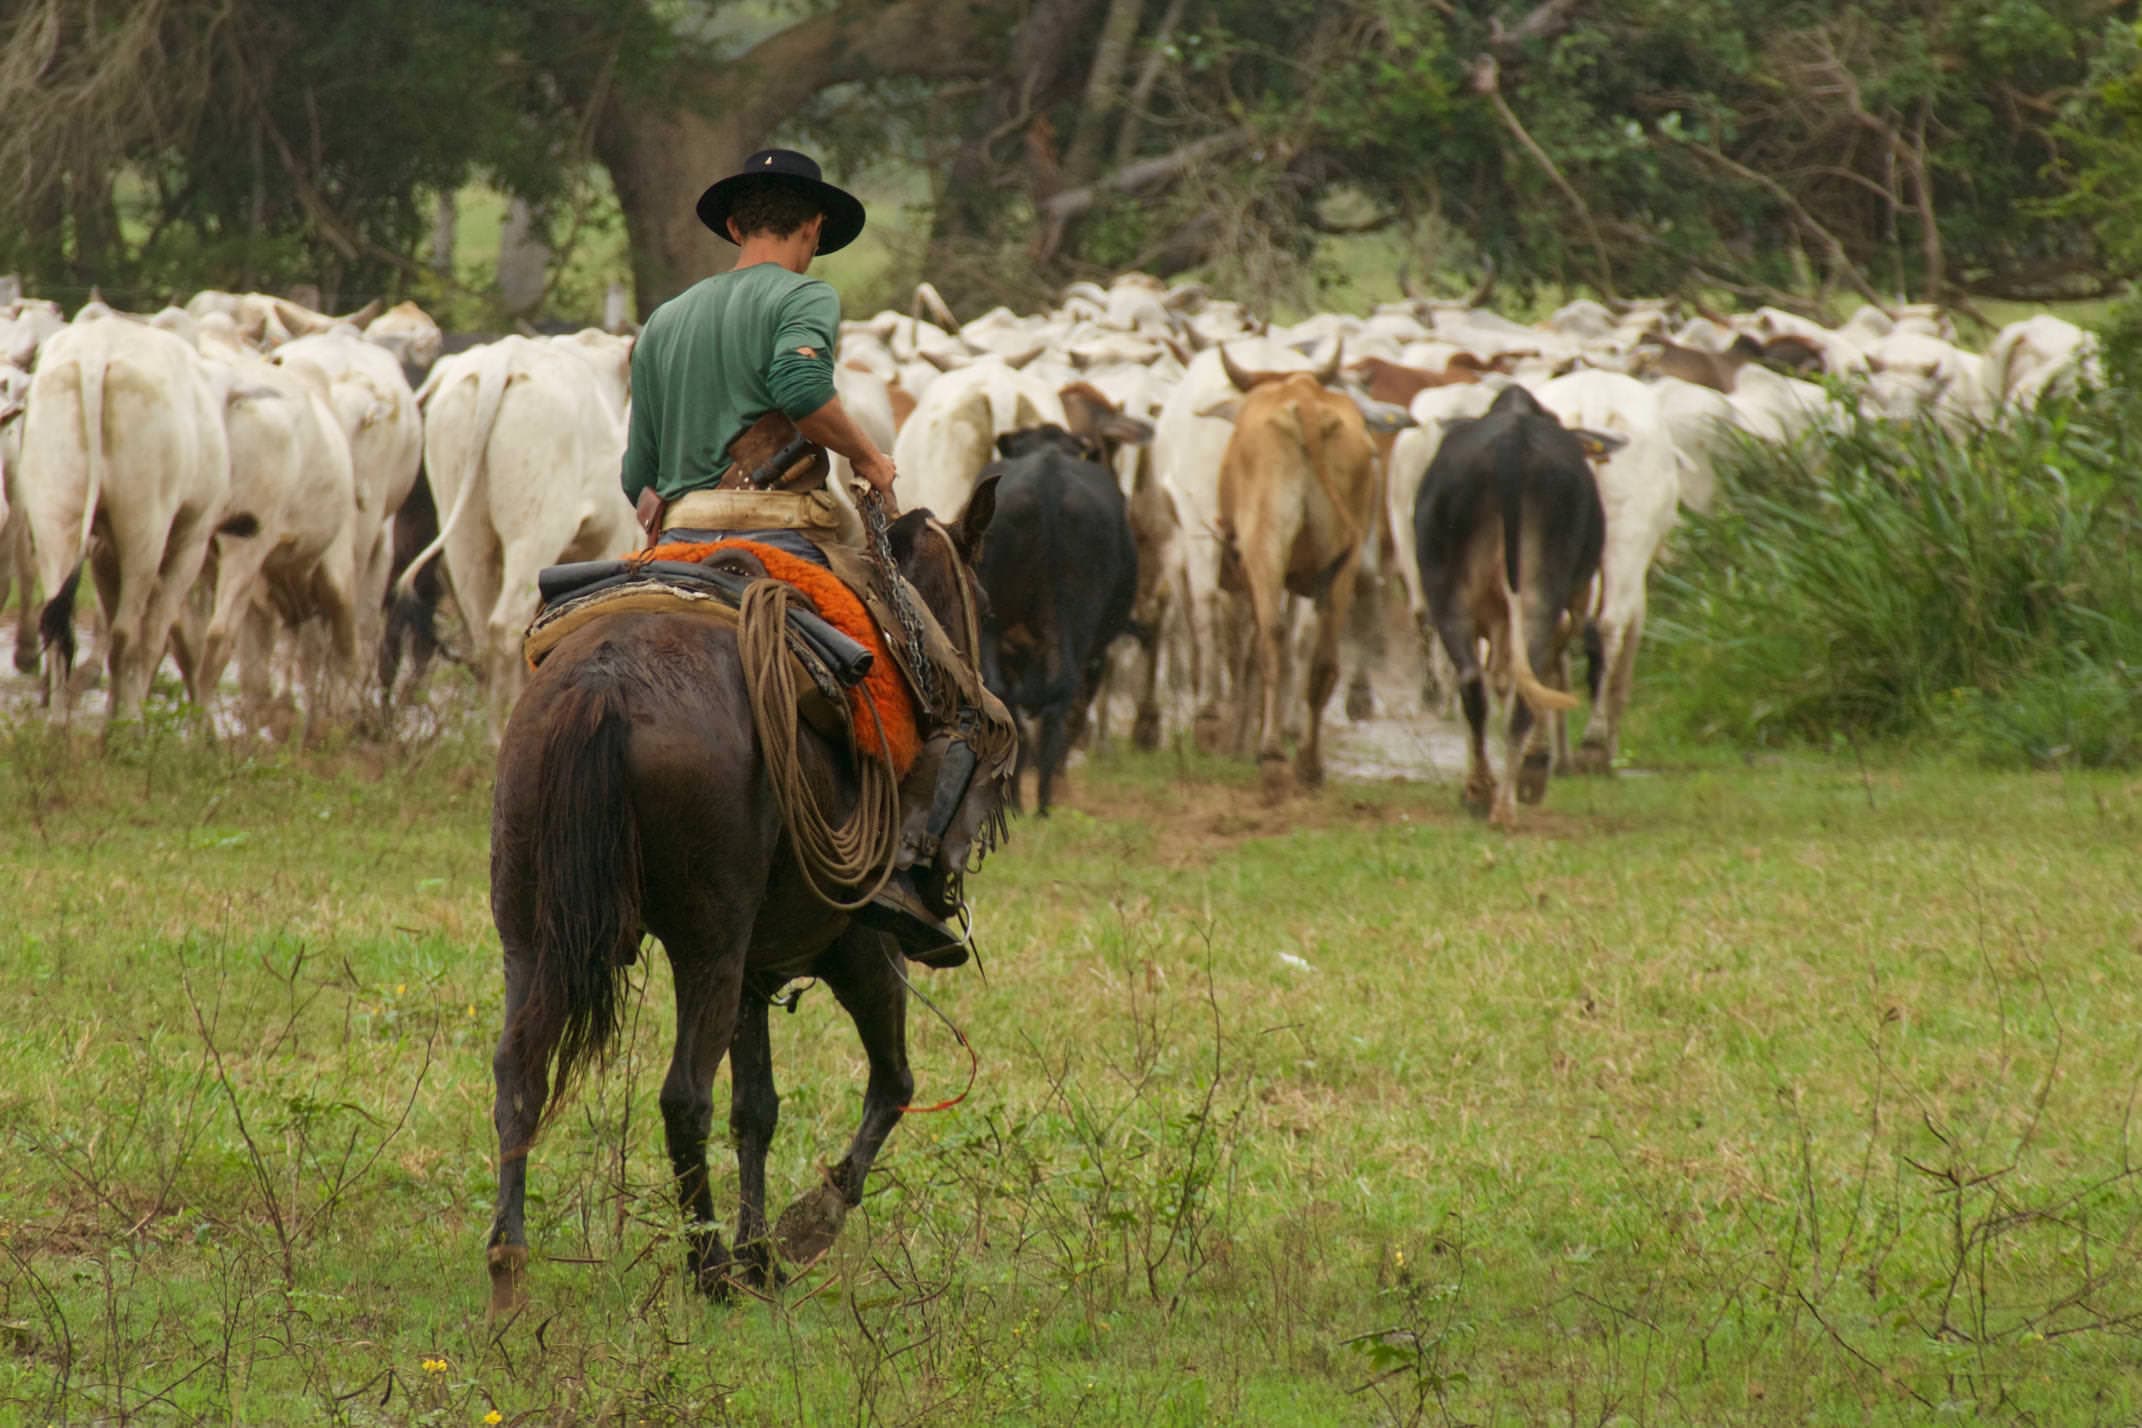 Brazil pantanal caiman lodge herding cattle copyright thomas power pura aventura jpg